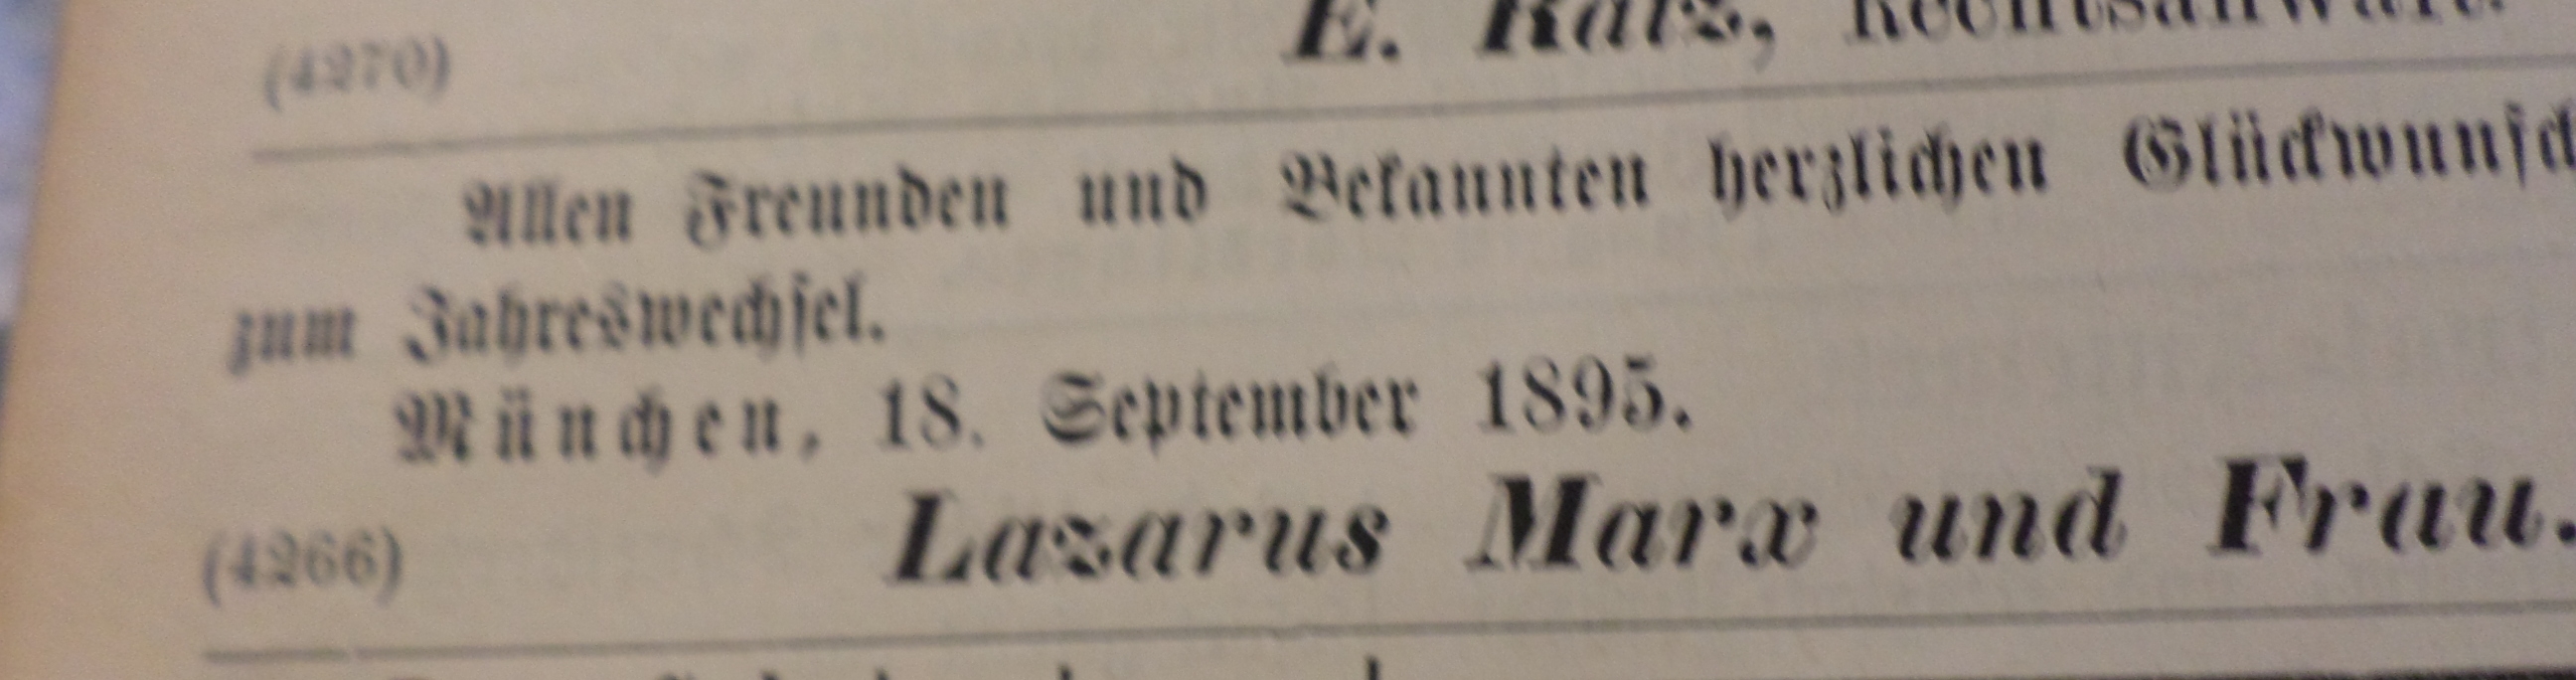 Noe Anzeigeblatt 1895 09 19 Marx Rosch ha Schana